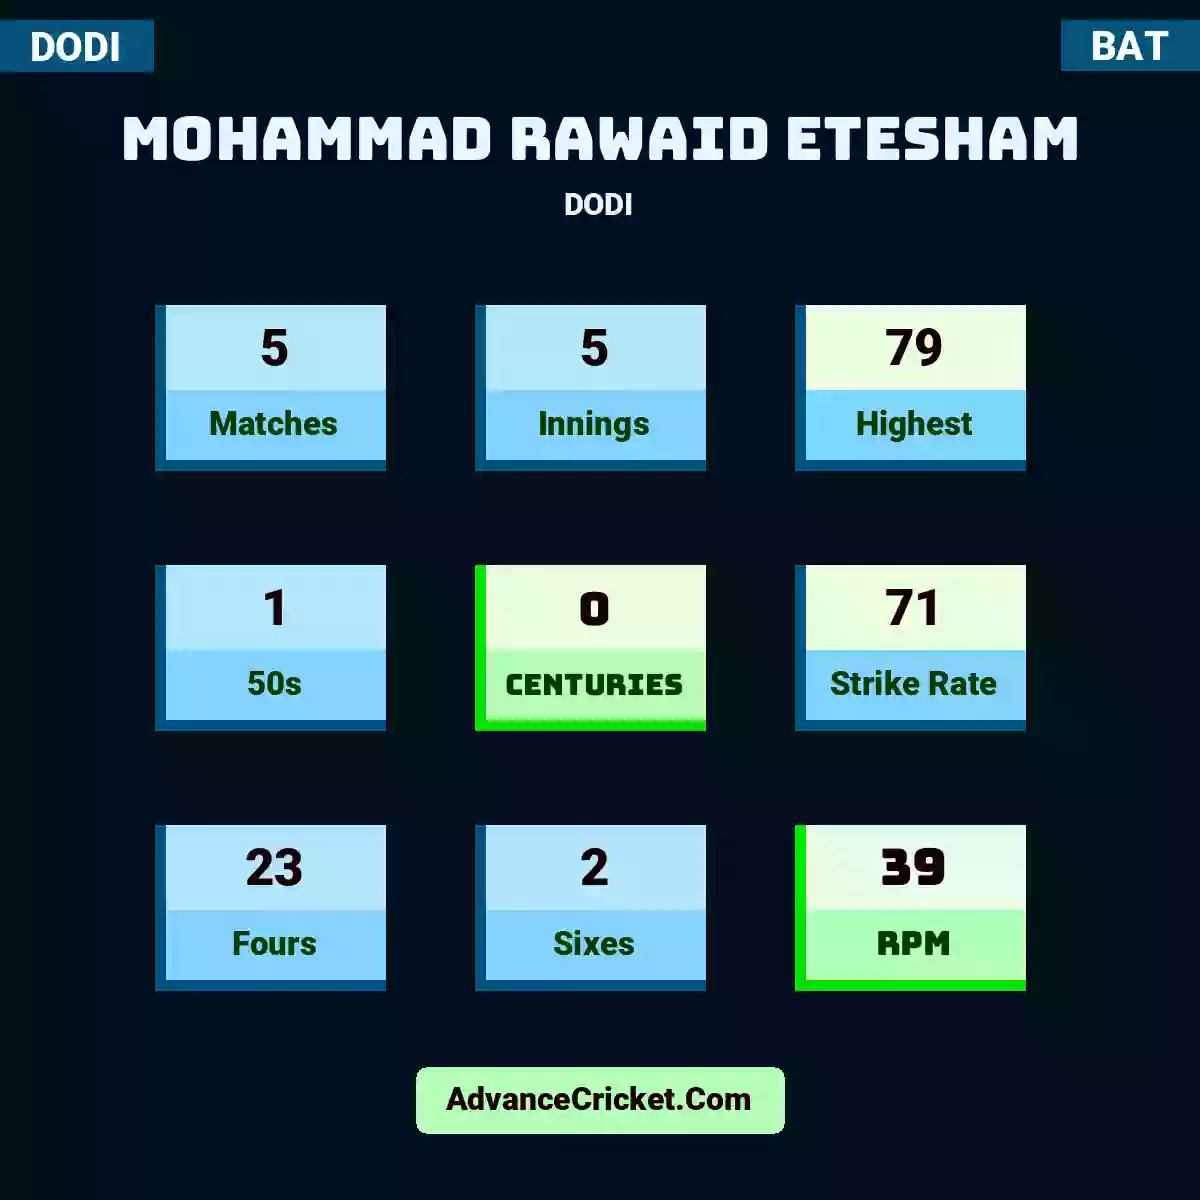 Mohammad Rawaid Etesham DODI , Mohammad Rawaid Etesham played 5 matches, scored 79 runs as highest, 1 half-centuries, and 0 centuries, with a strike rate of 71. M.Rawaid.Etesham hit 23 fours and 2 sixes, with an RPM of 39.